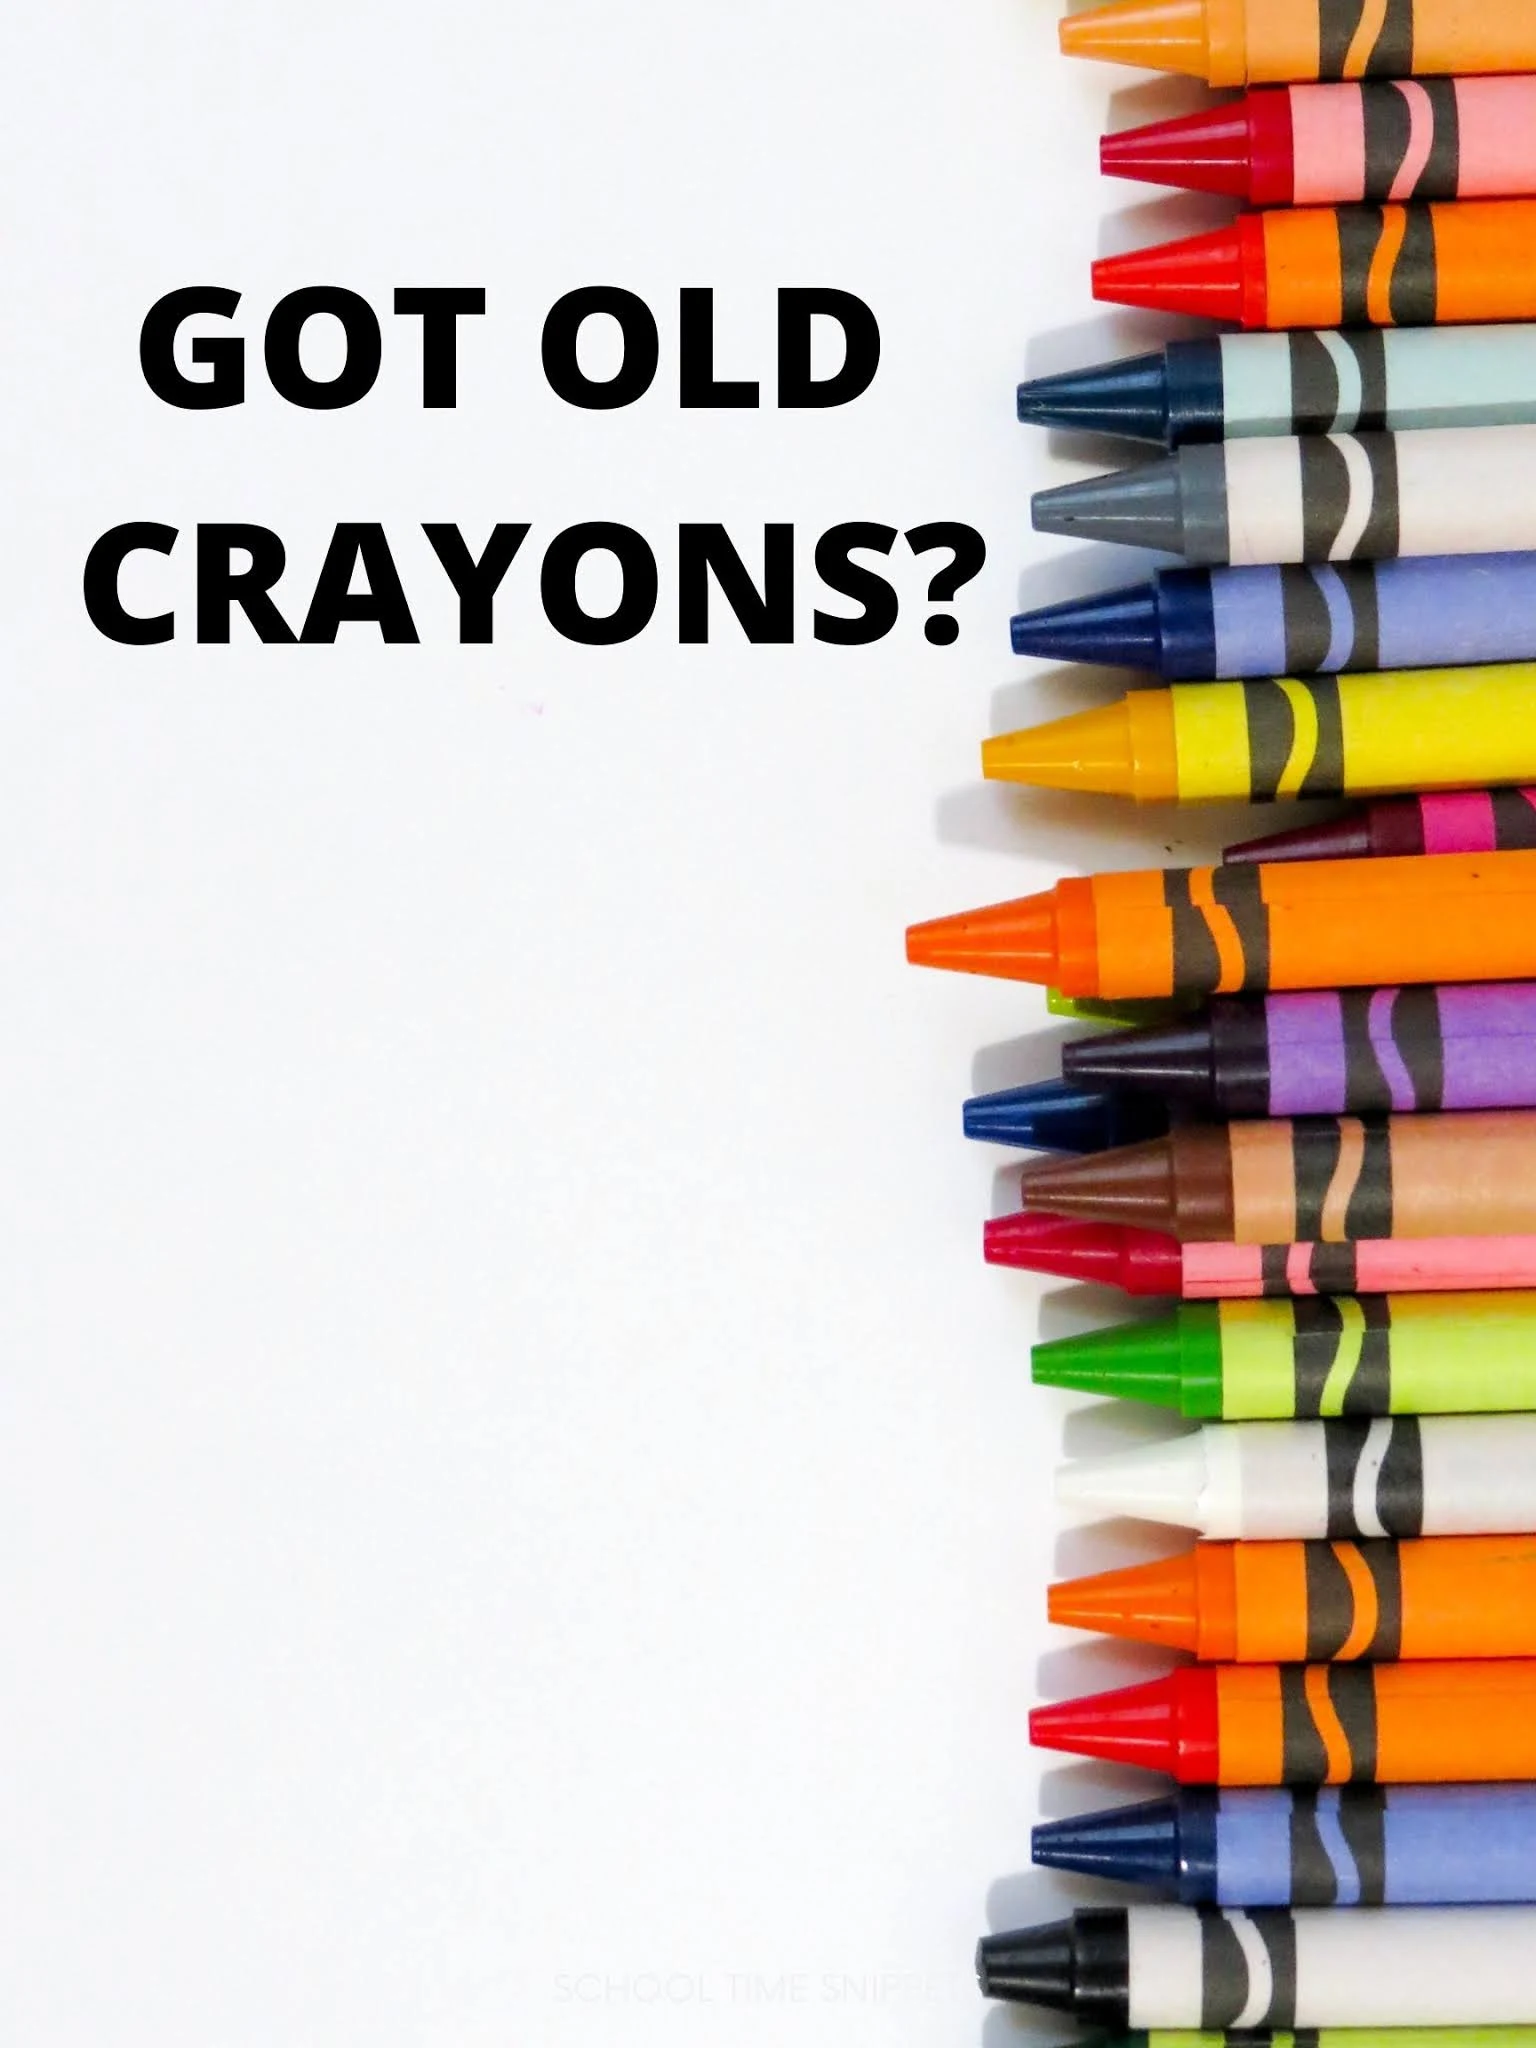 Break all your crayons